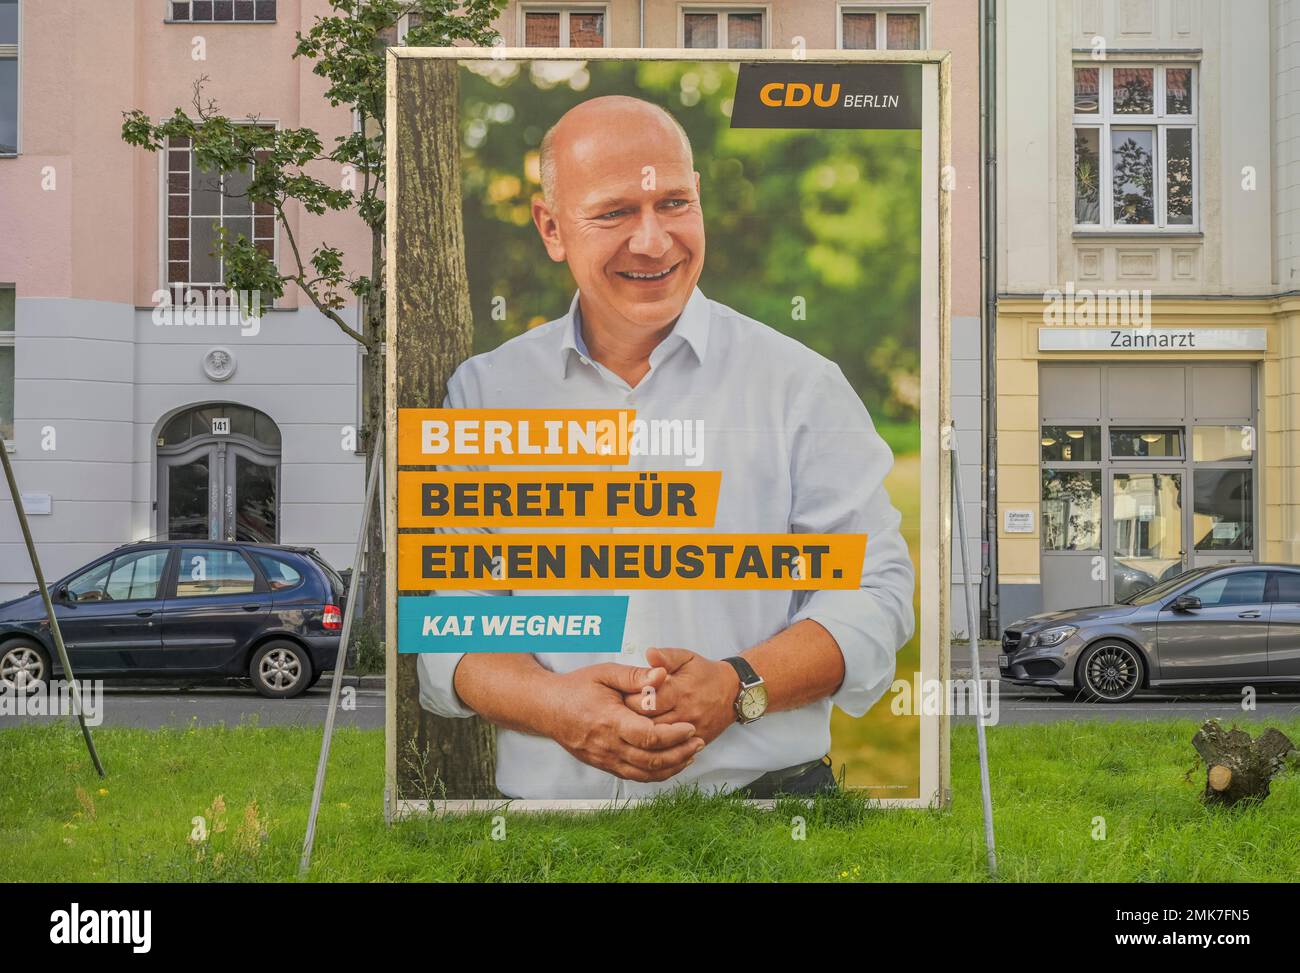 Kai Wegner, CDU-Wahlplakat, Berliner Wahl des Repräsentantenhauses, 2021, Berlin, Deutschland Stockfoto